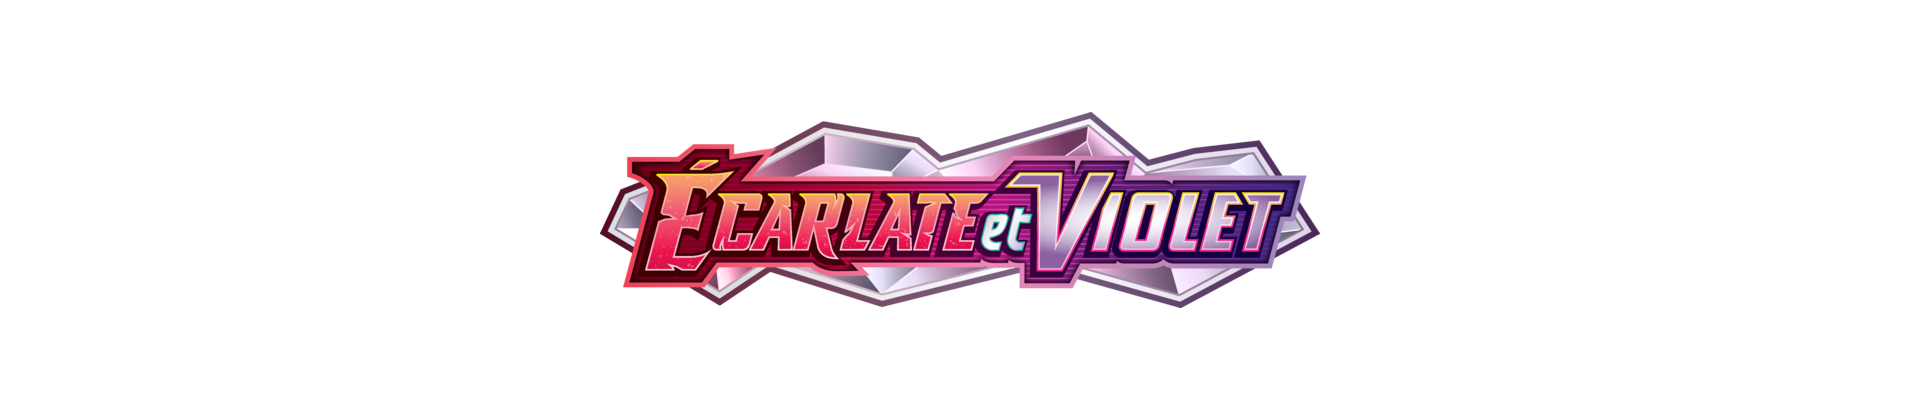 EV01 Ecarlate et Violet